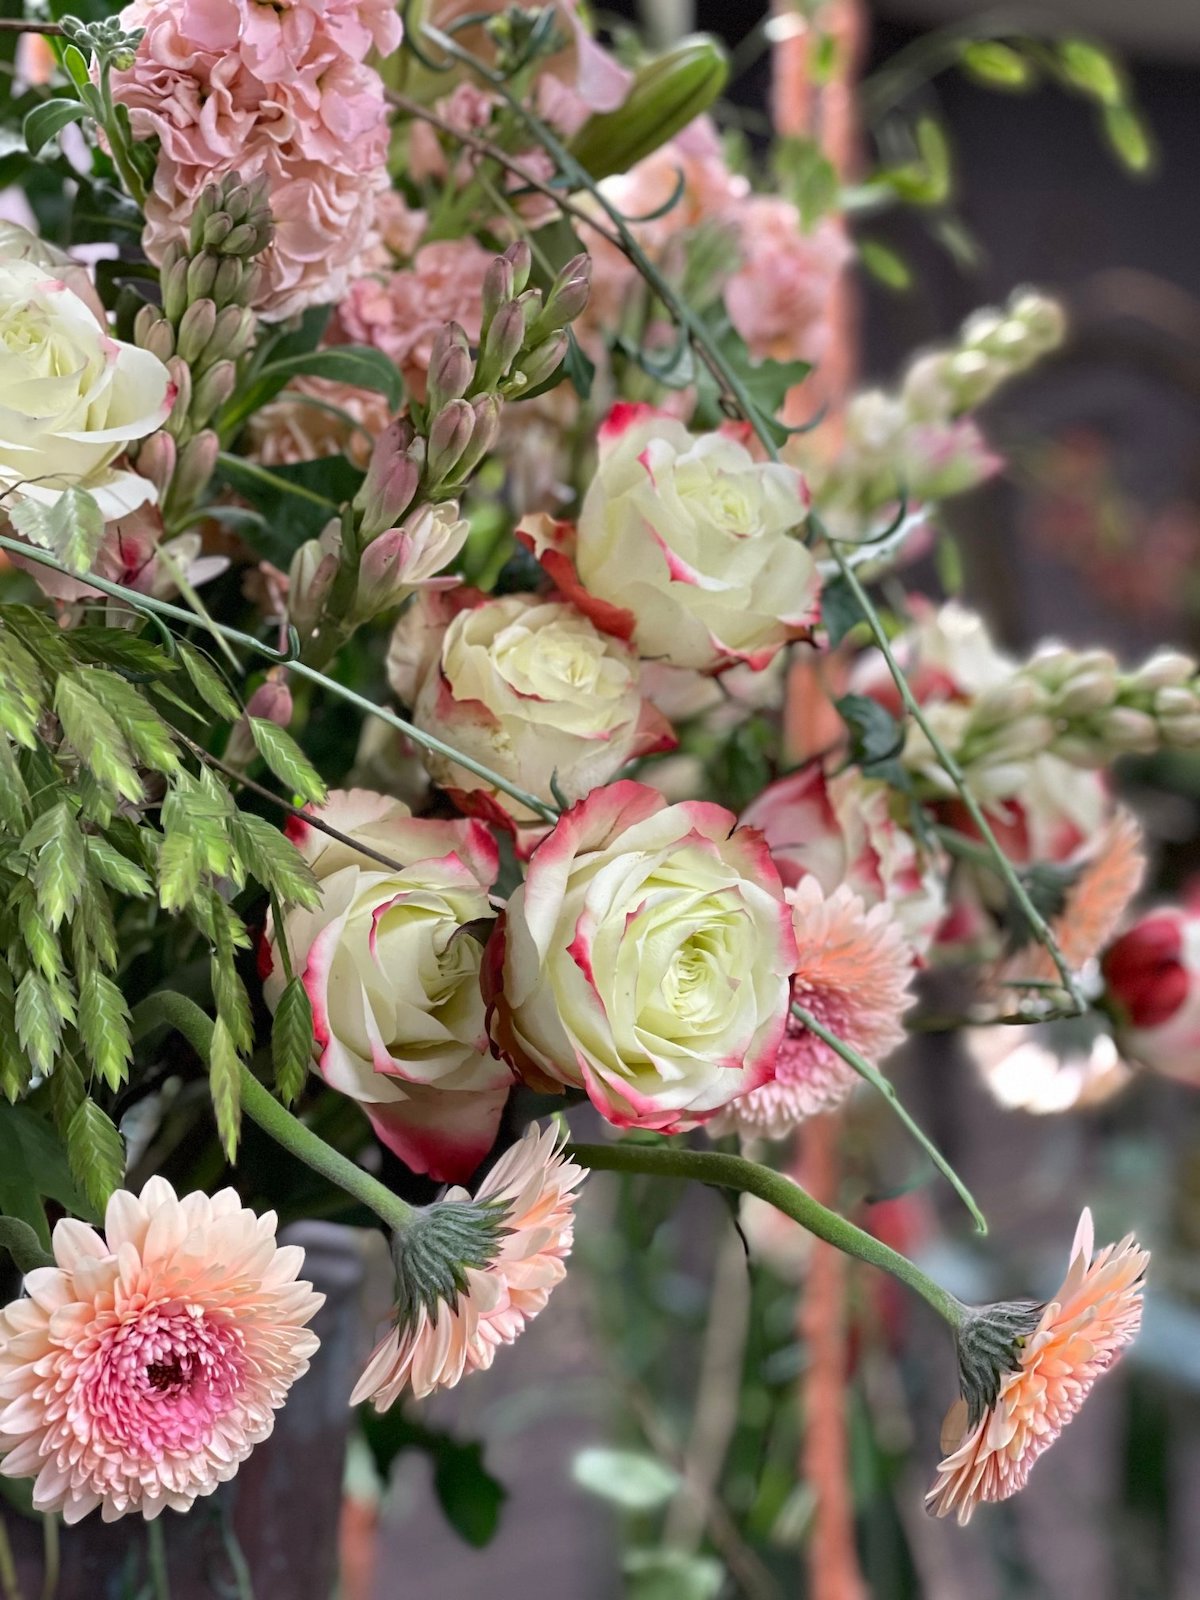 Gregor Lersch Floral Design with Fairy Queen roses - Decofresh on Thursd